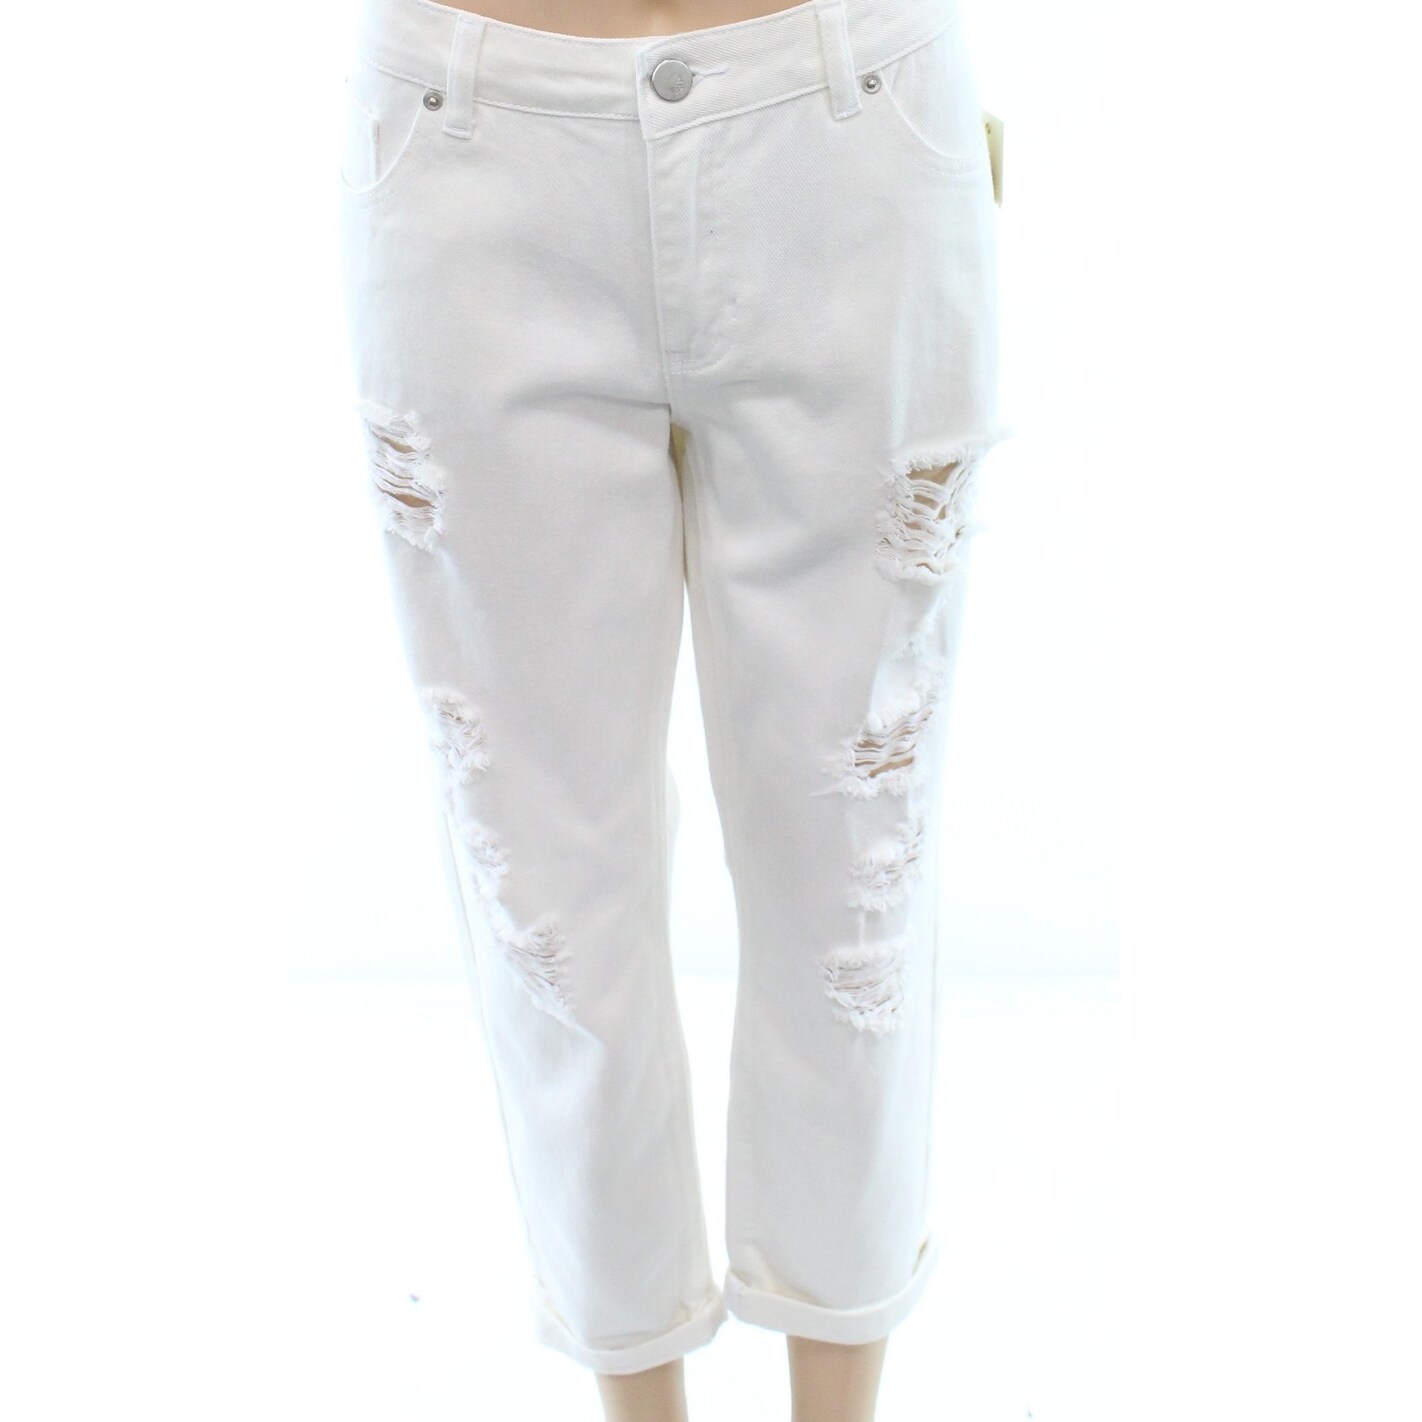 white ripped capri jeans